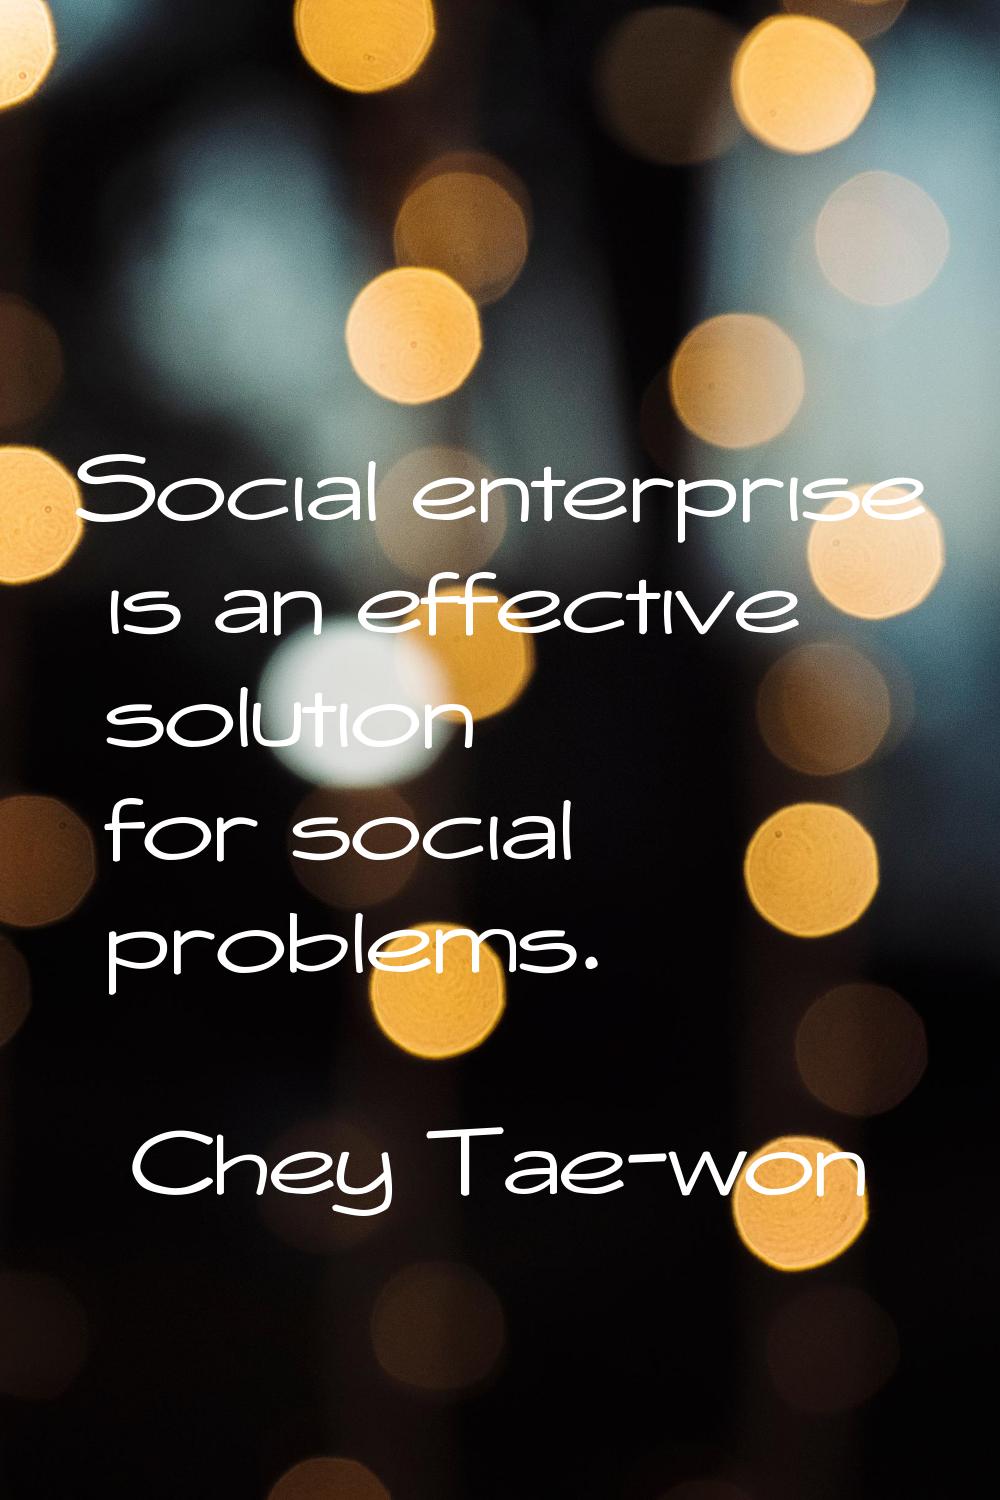 Social enterprise is an effective solution for social problems.